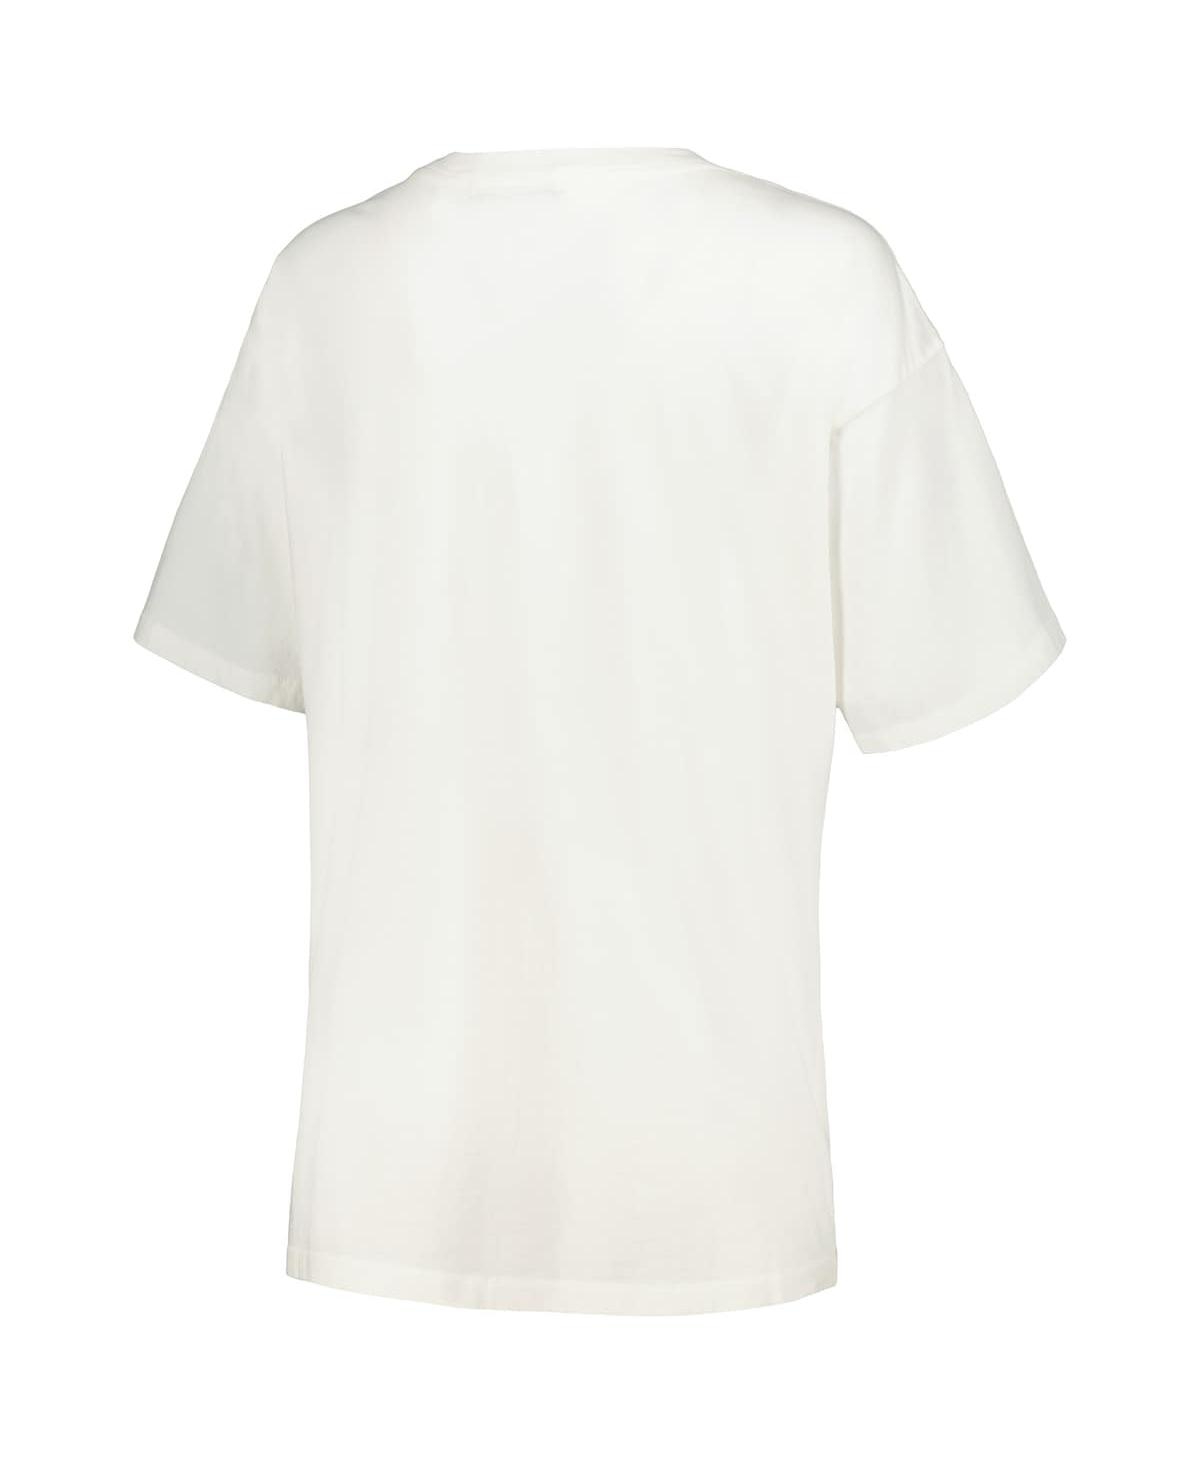 Shop Daydreamer Women's  White Distressed Wu-tang Graphic T-shirt